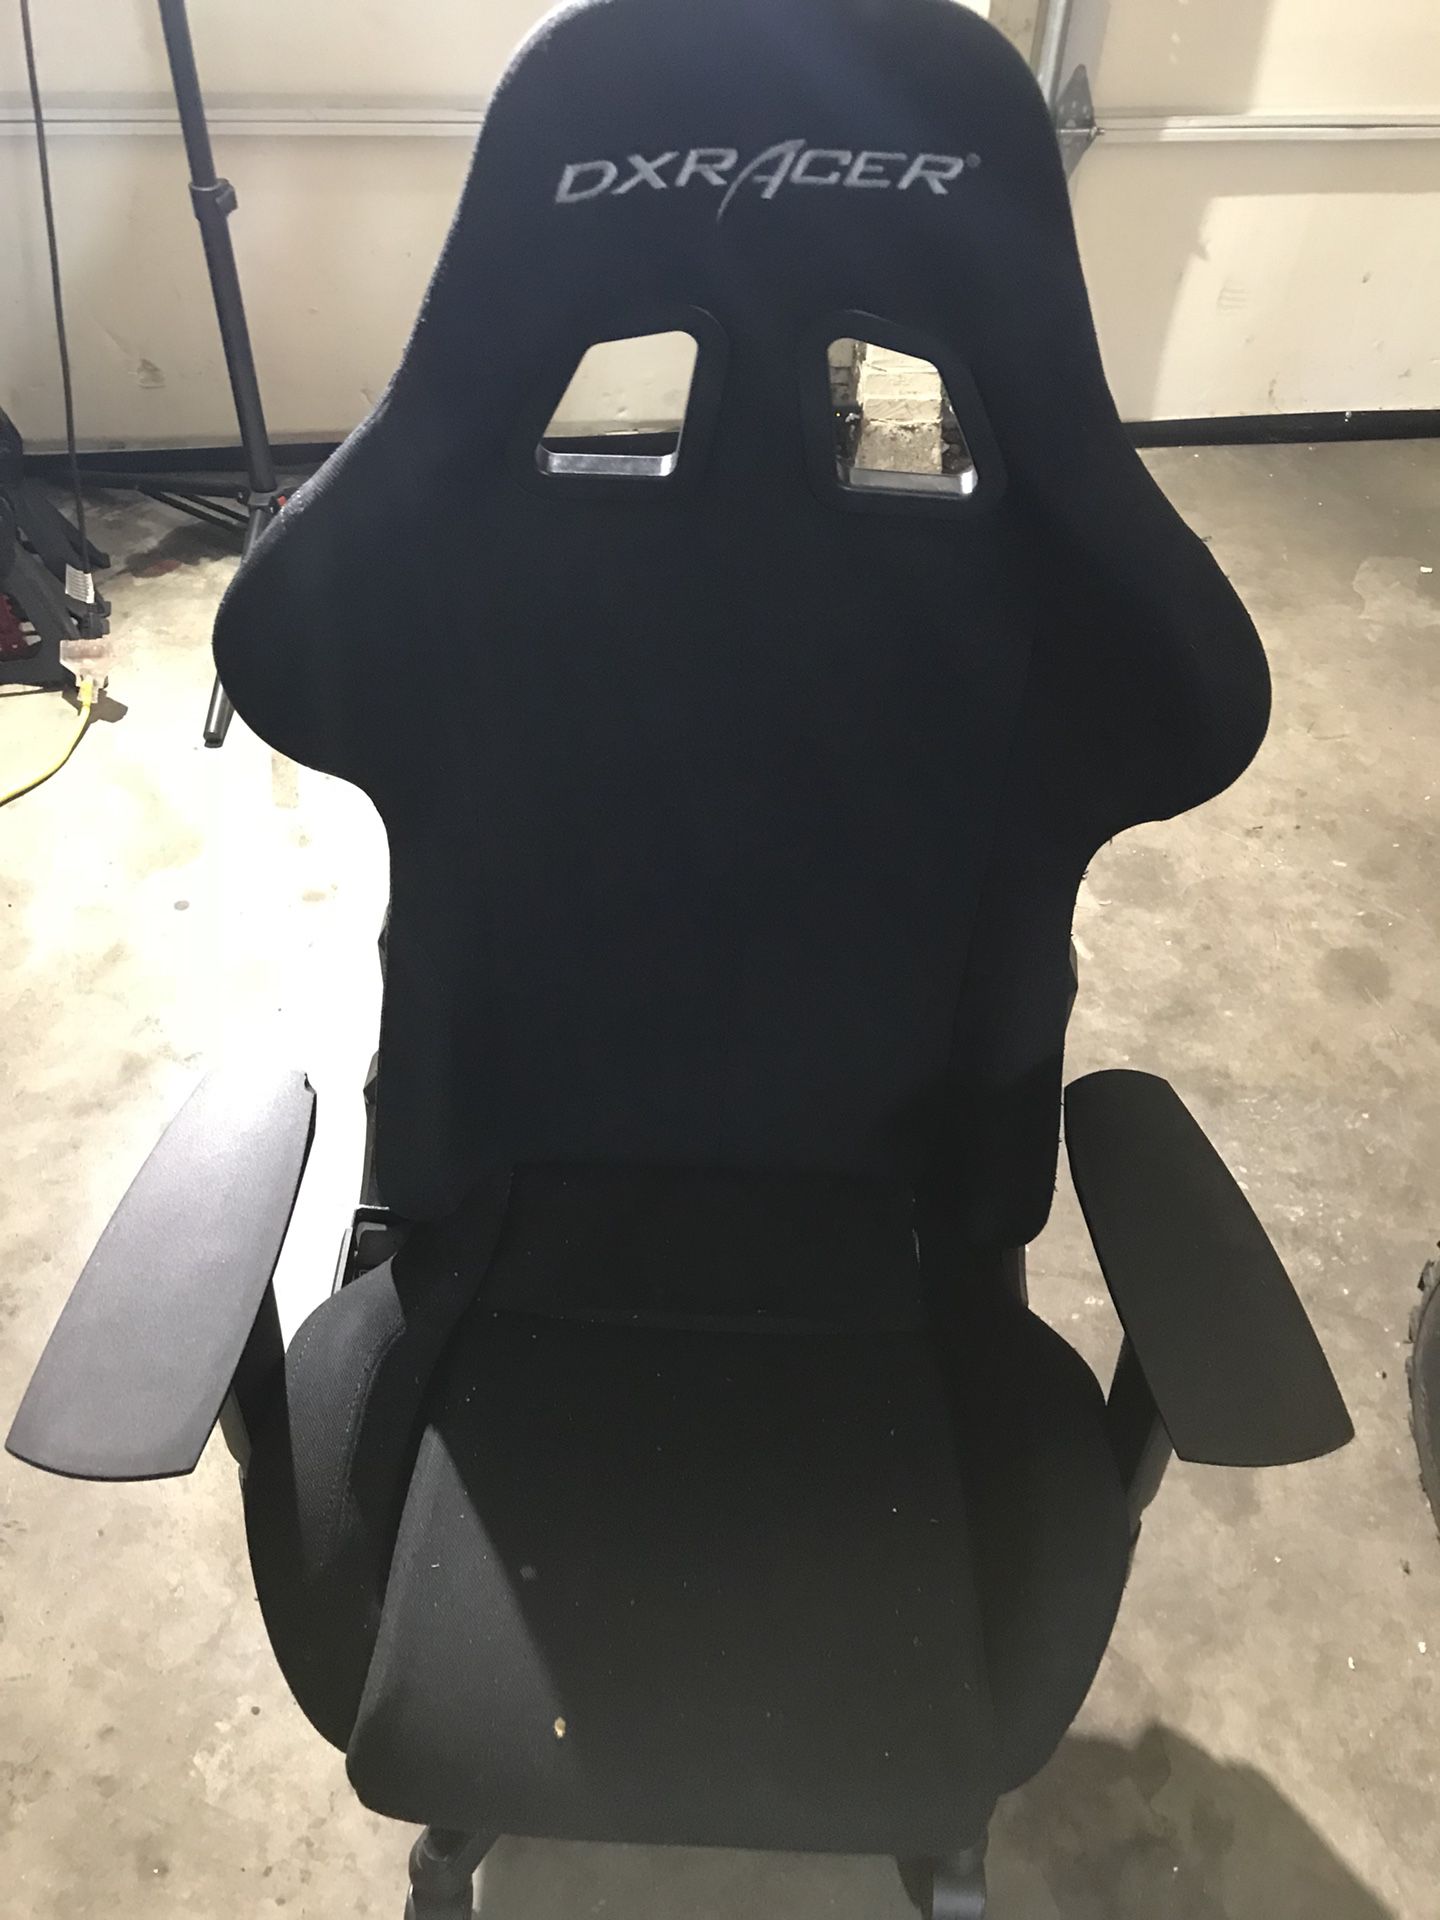 DxRacer gaming chair